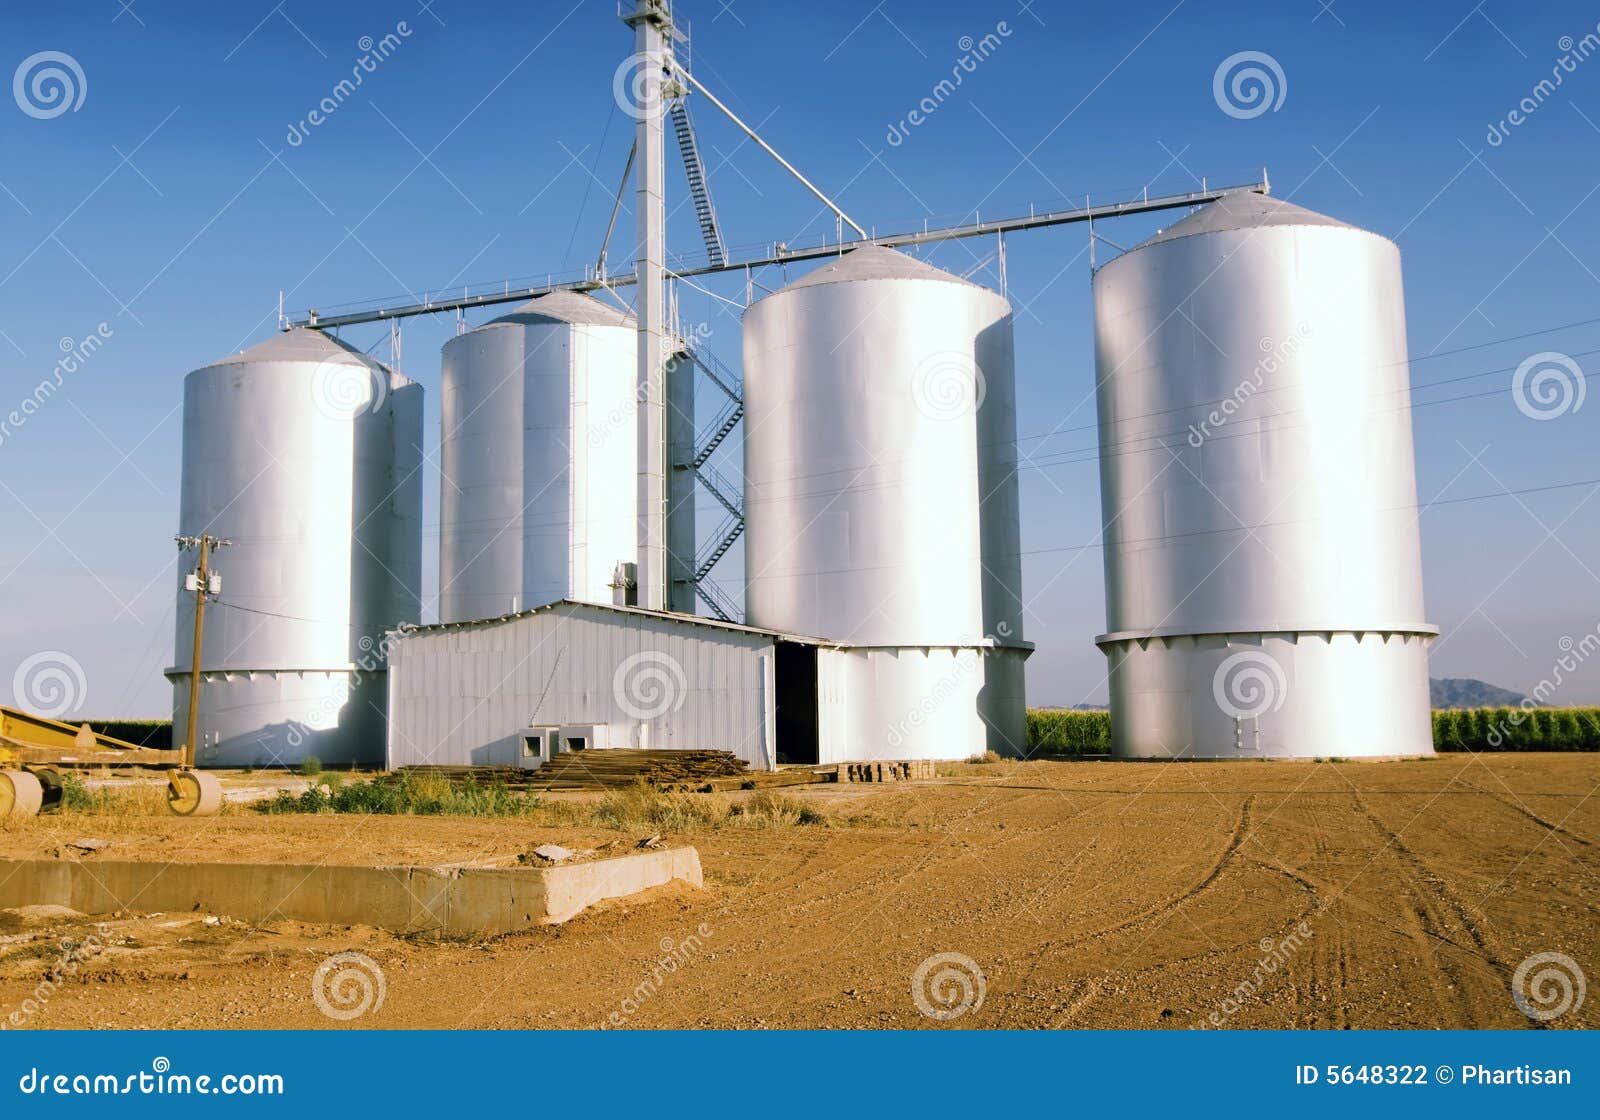 Grain Silo On Farm In Gilbrt,AZ Stock Photo - Image: 5648322